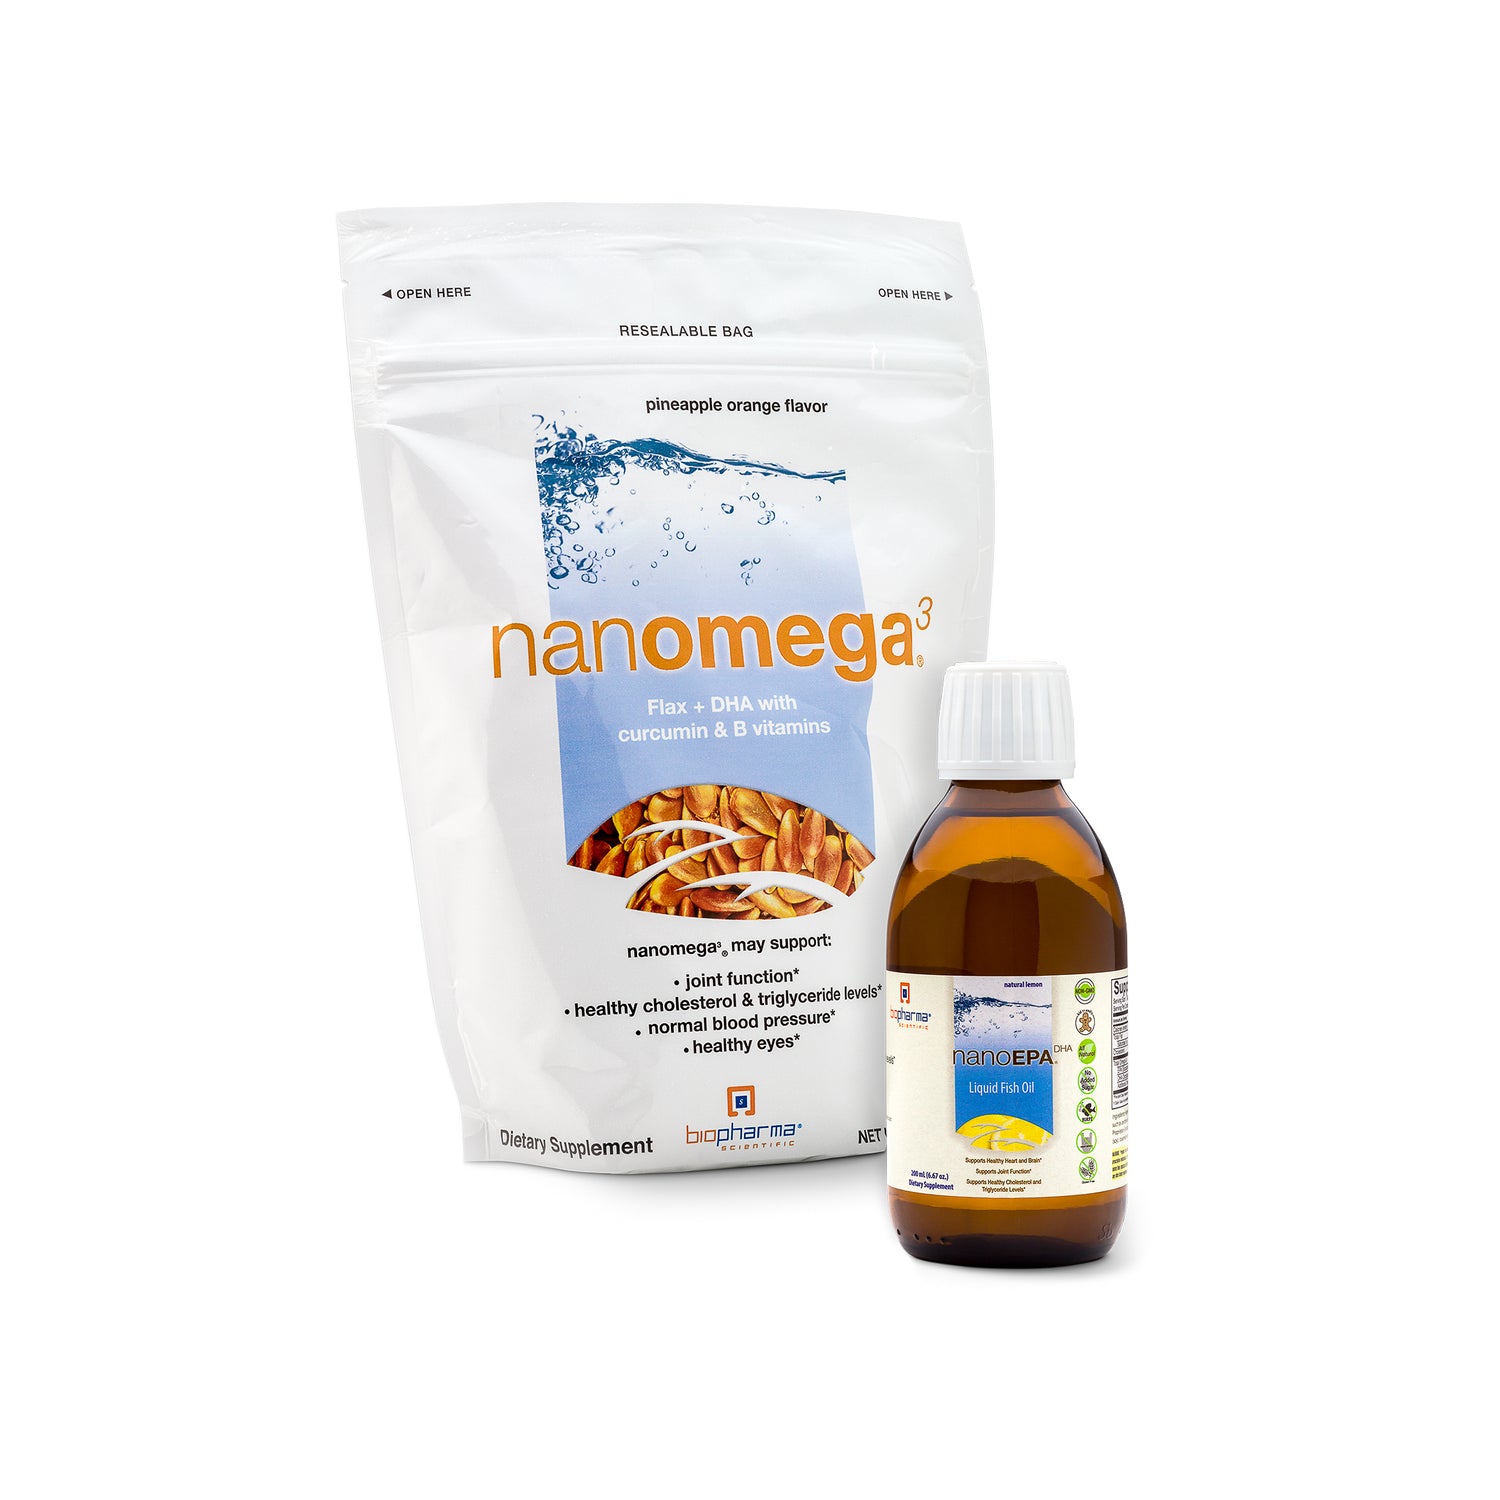 nanoEPA and nanomega fish oil flax dha supplements